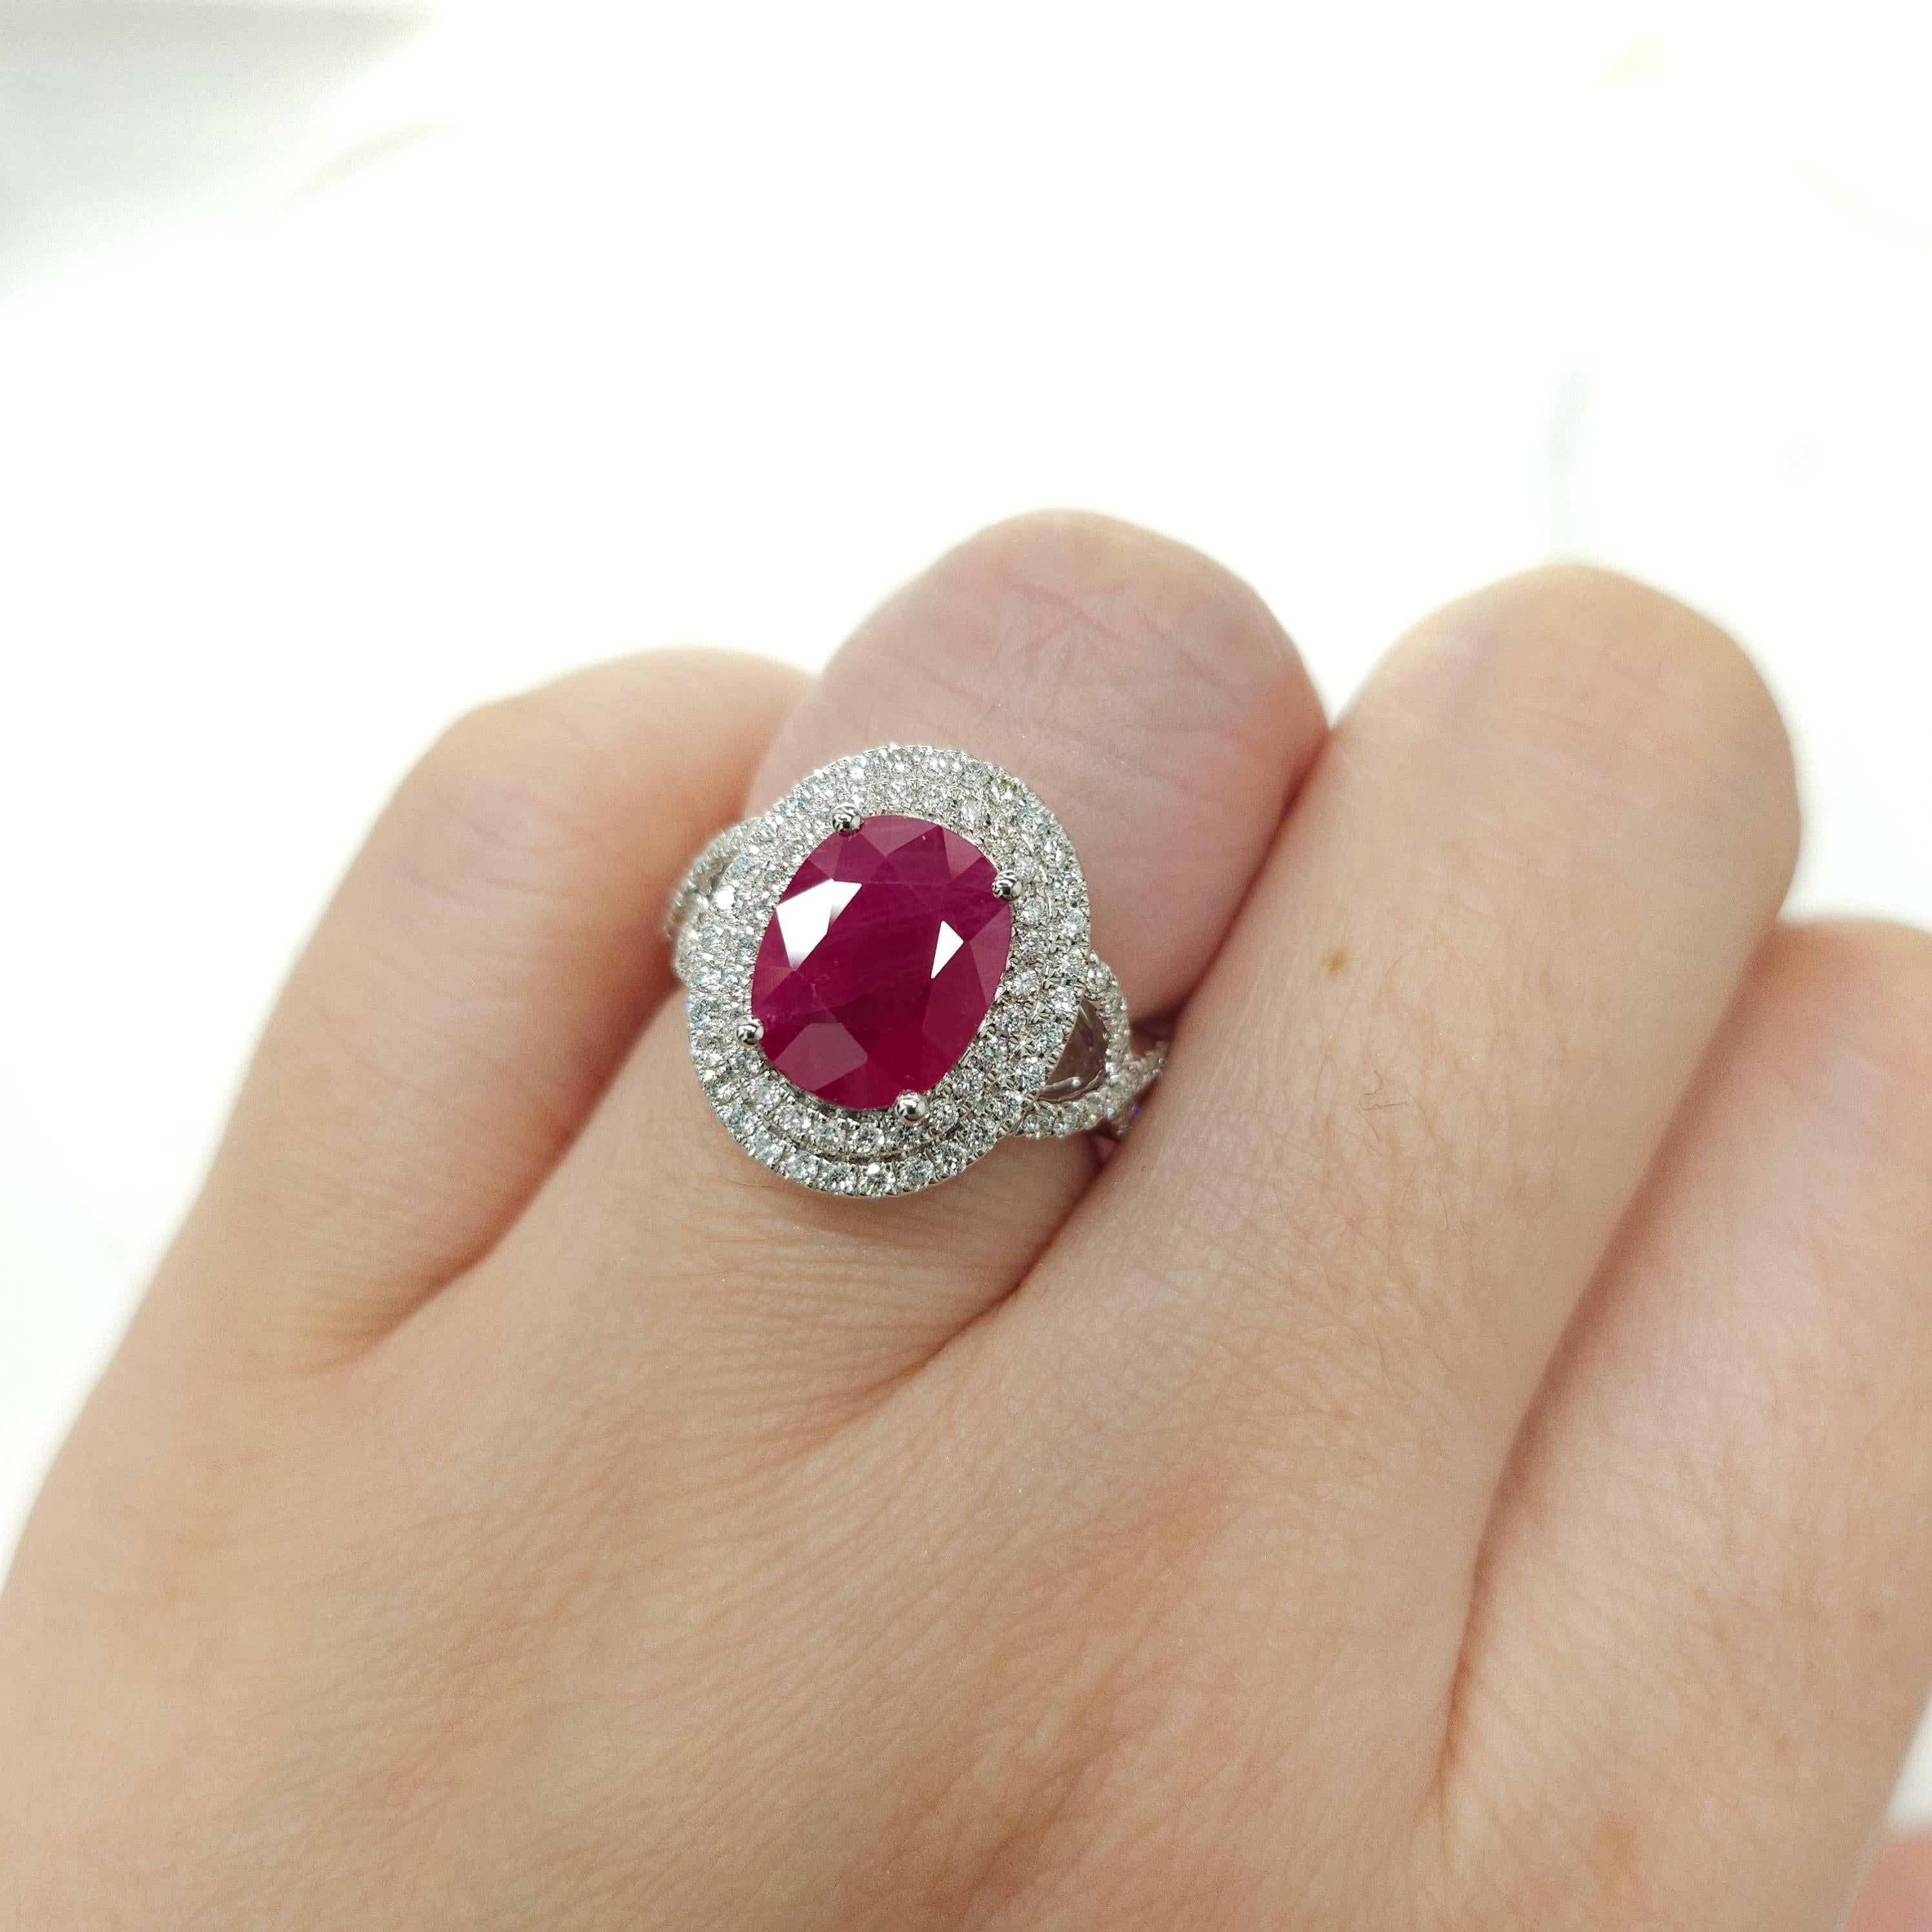 IGI Certified 3.42 Carat Burma Ruby & Diamond Ring in 18K White Gold For Sale 2